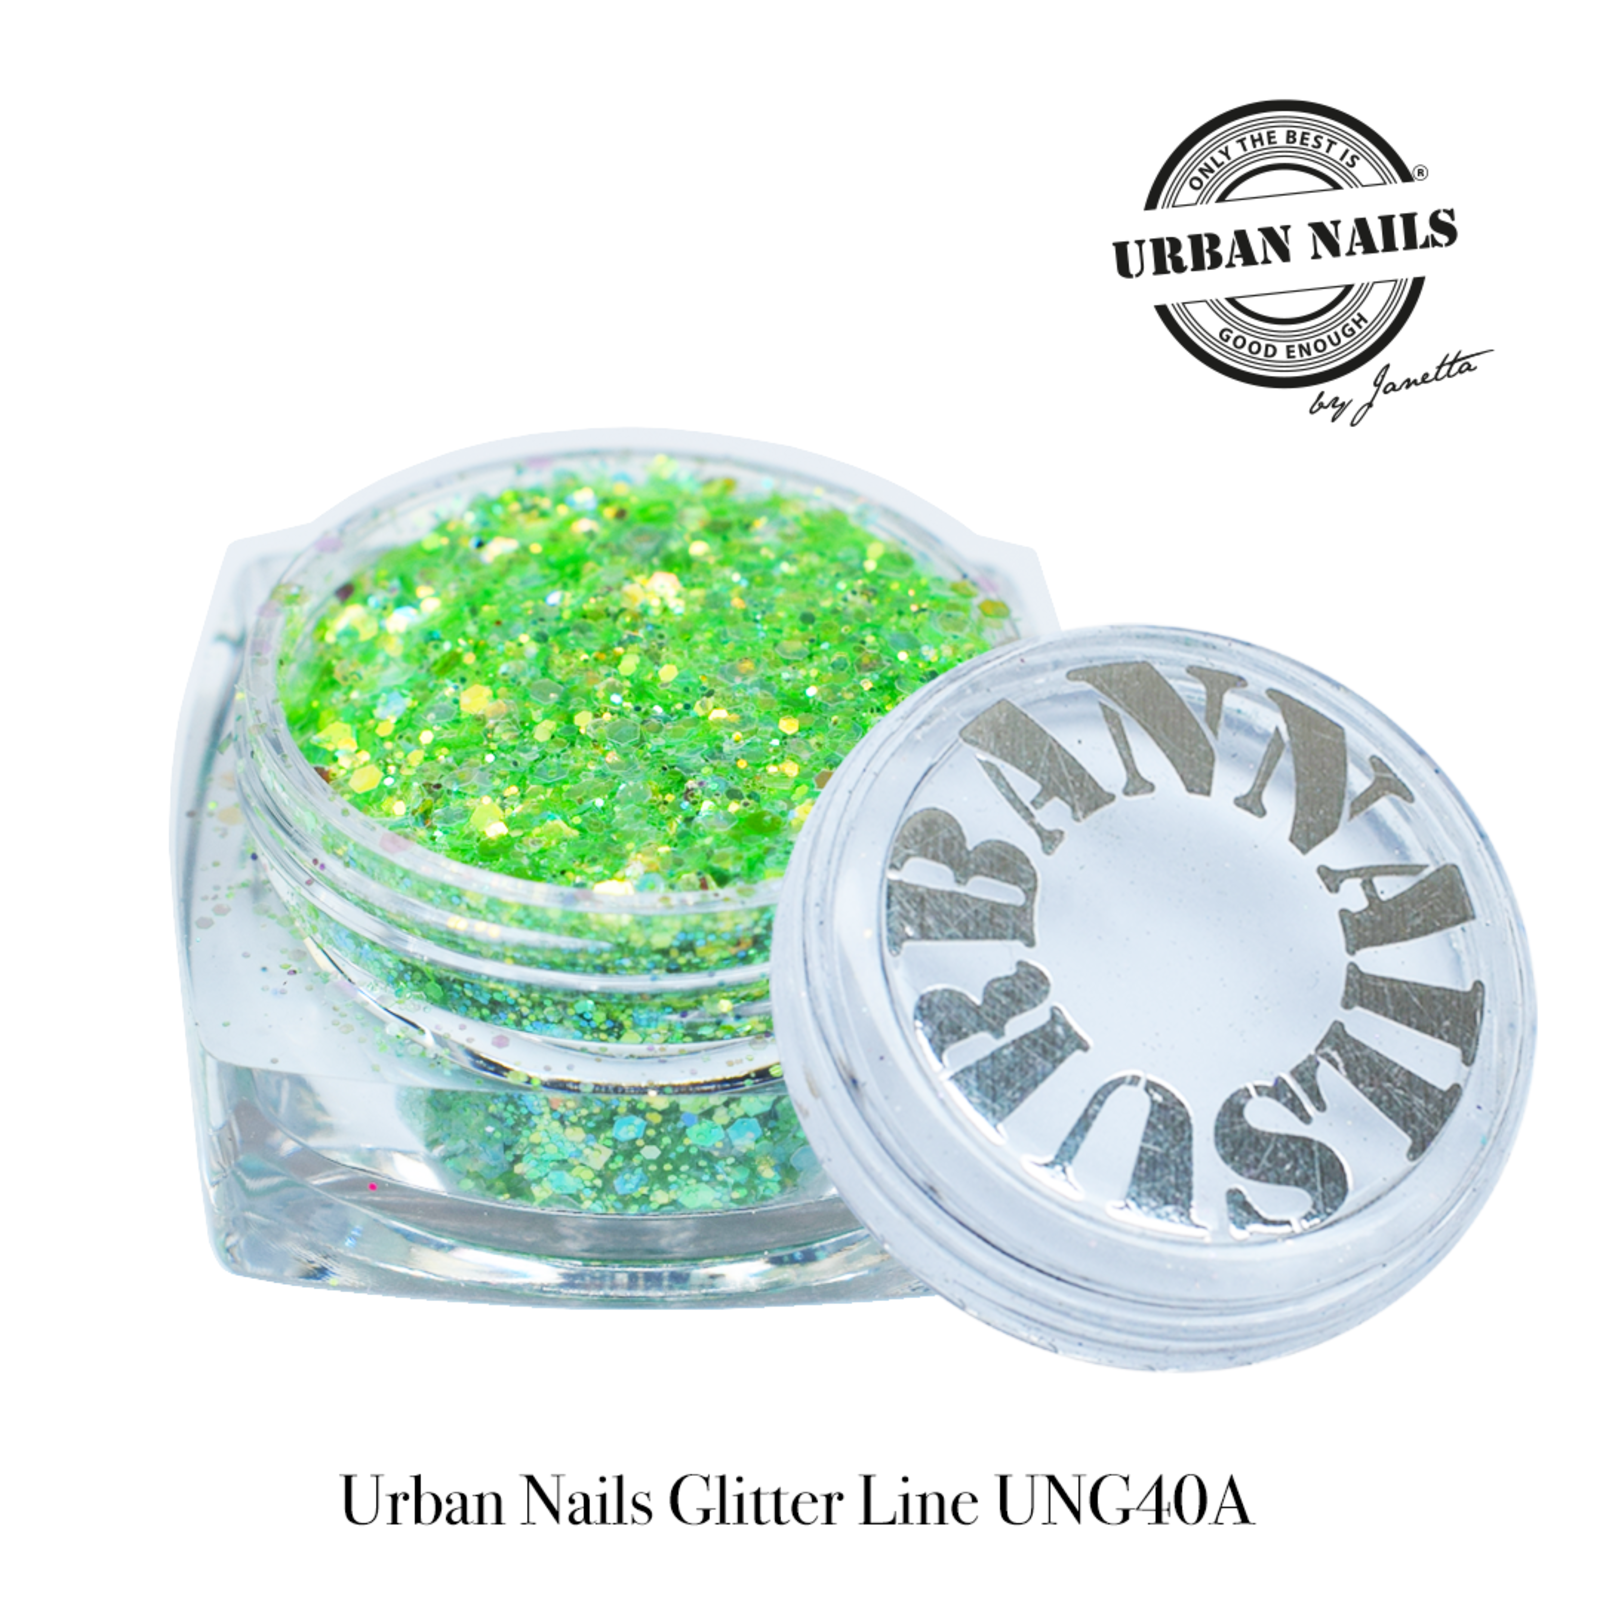 Urban nails Glitter Line UNG40-A